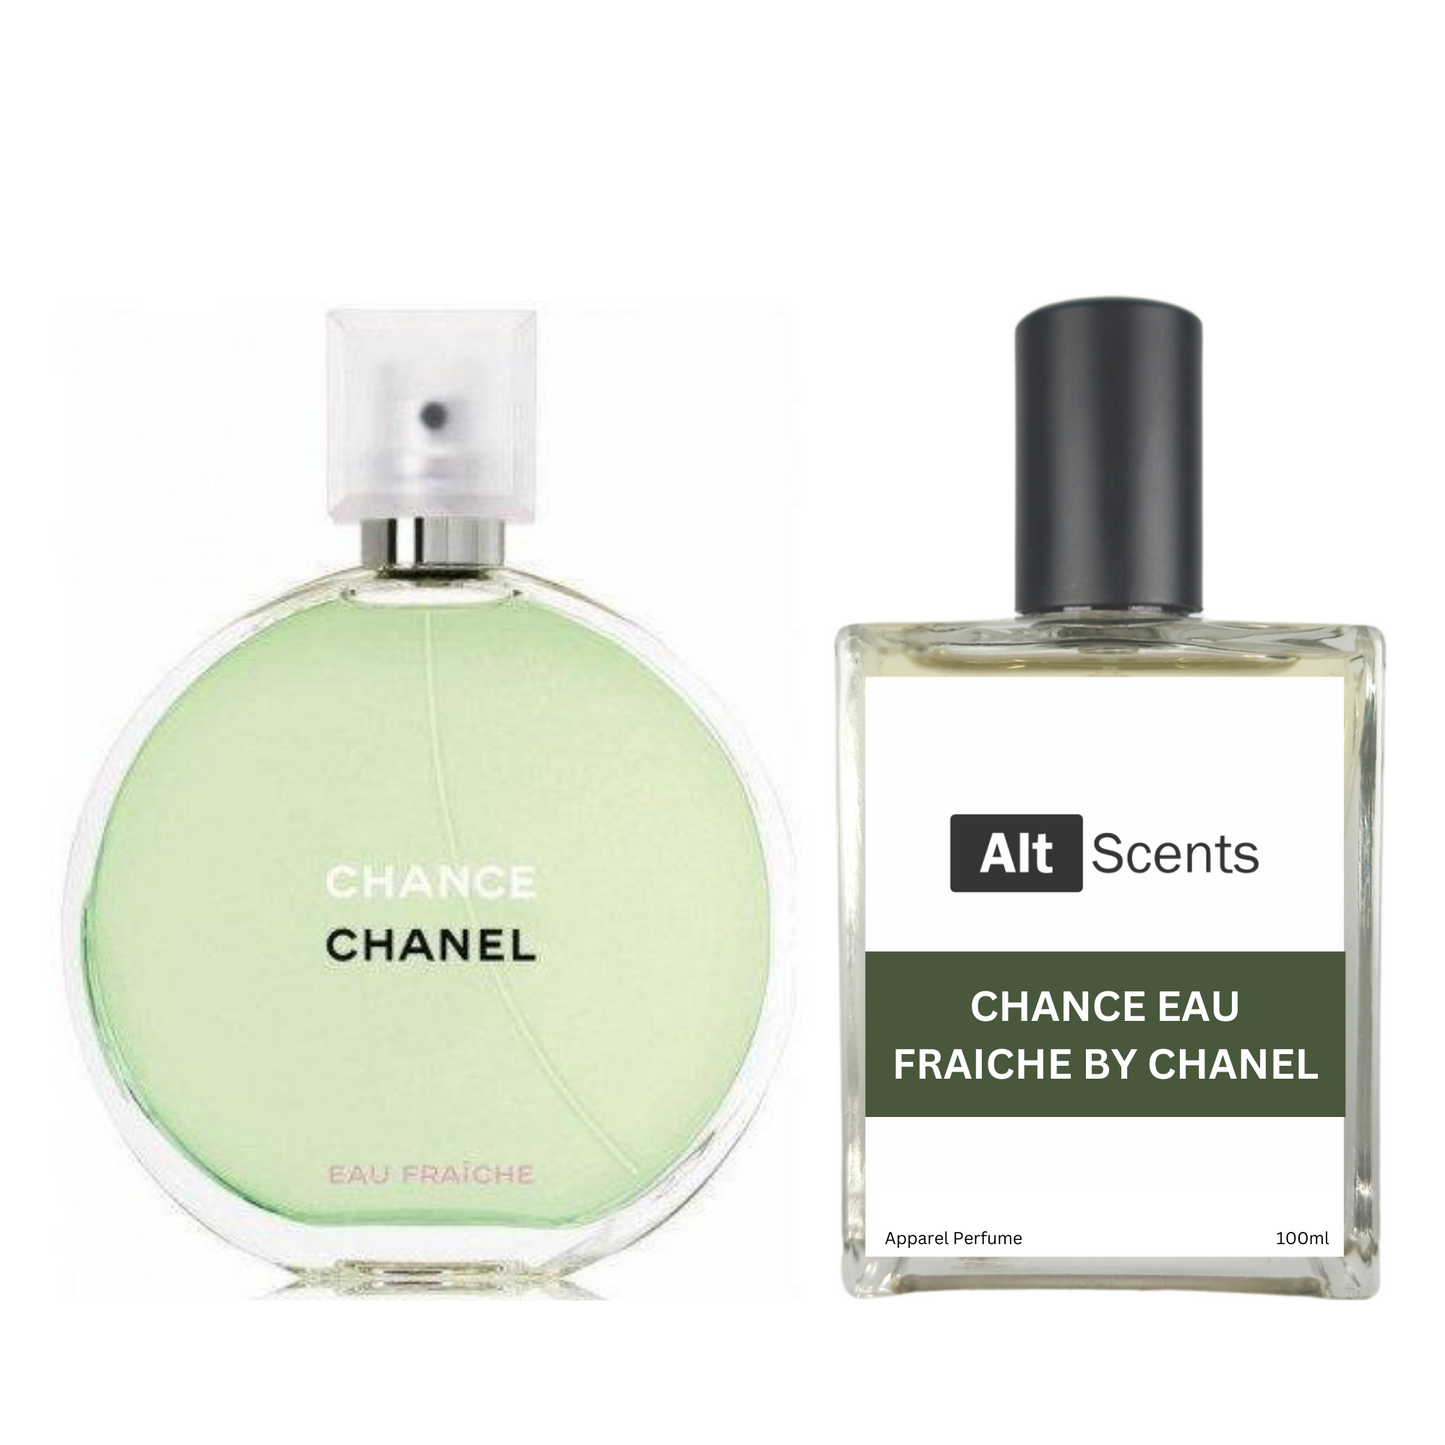 Chance Eau Fraiche by Chanel type Perfume for Women